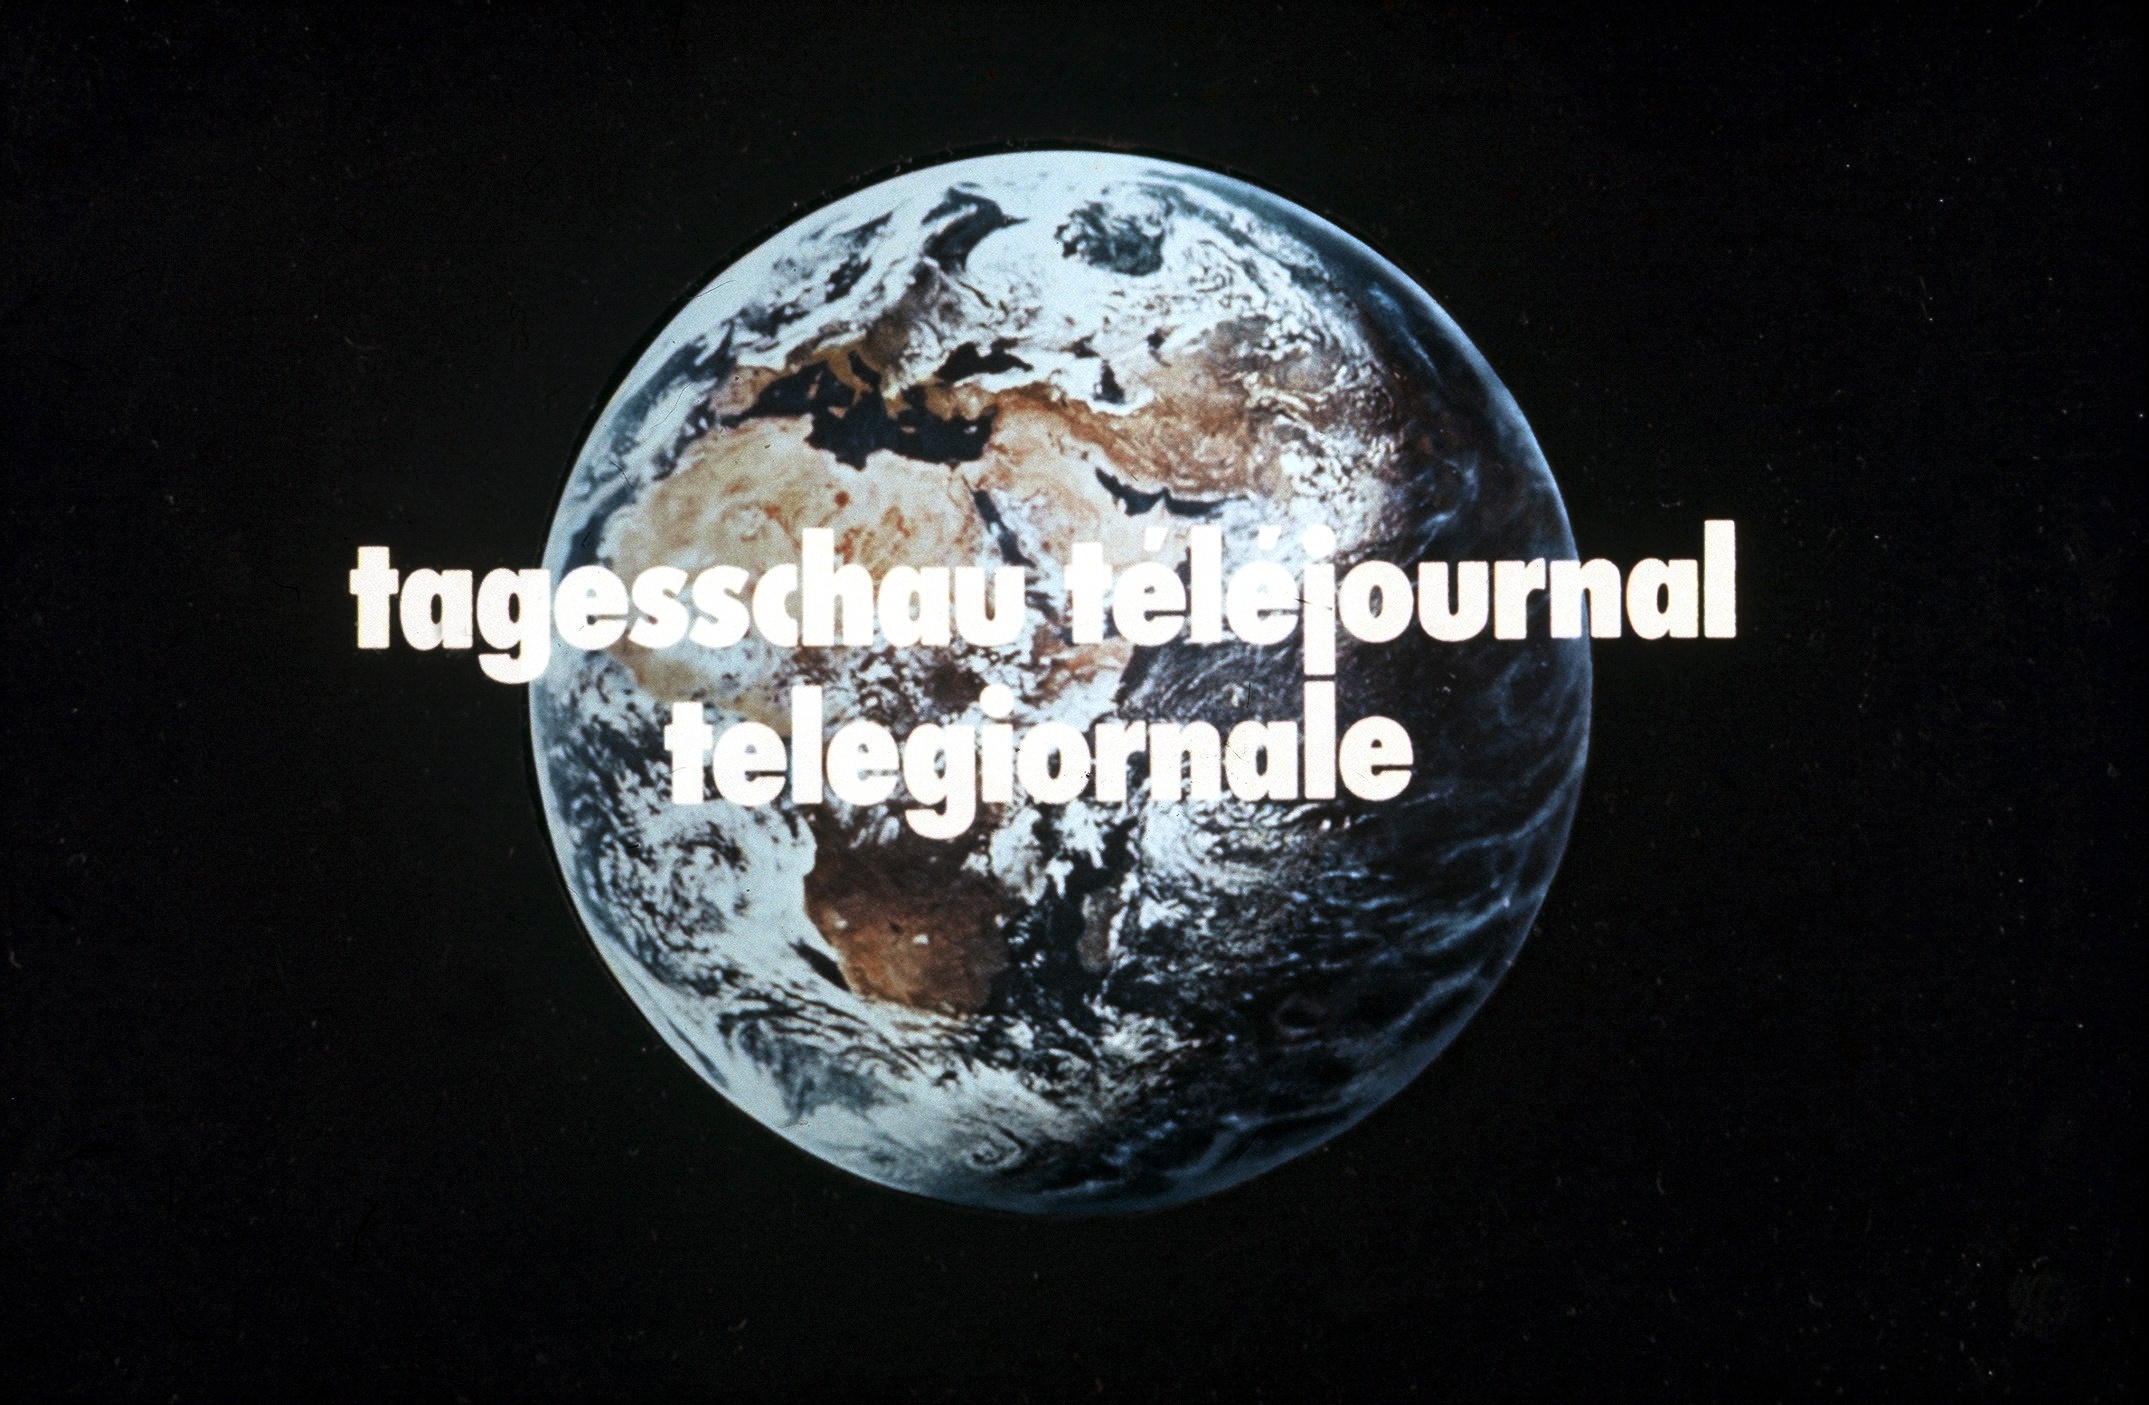 Chronik 50 Jahre SF DRSTagesschau Téléjournal Telegiornale, Signet 1973-1979Copyright: SF DRS